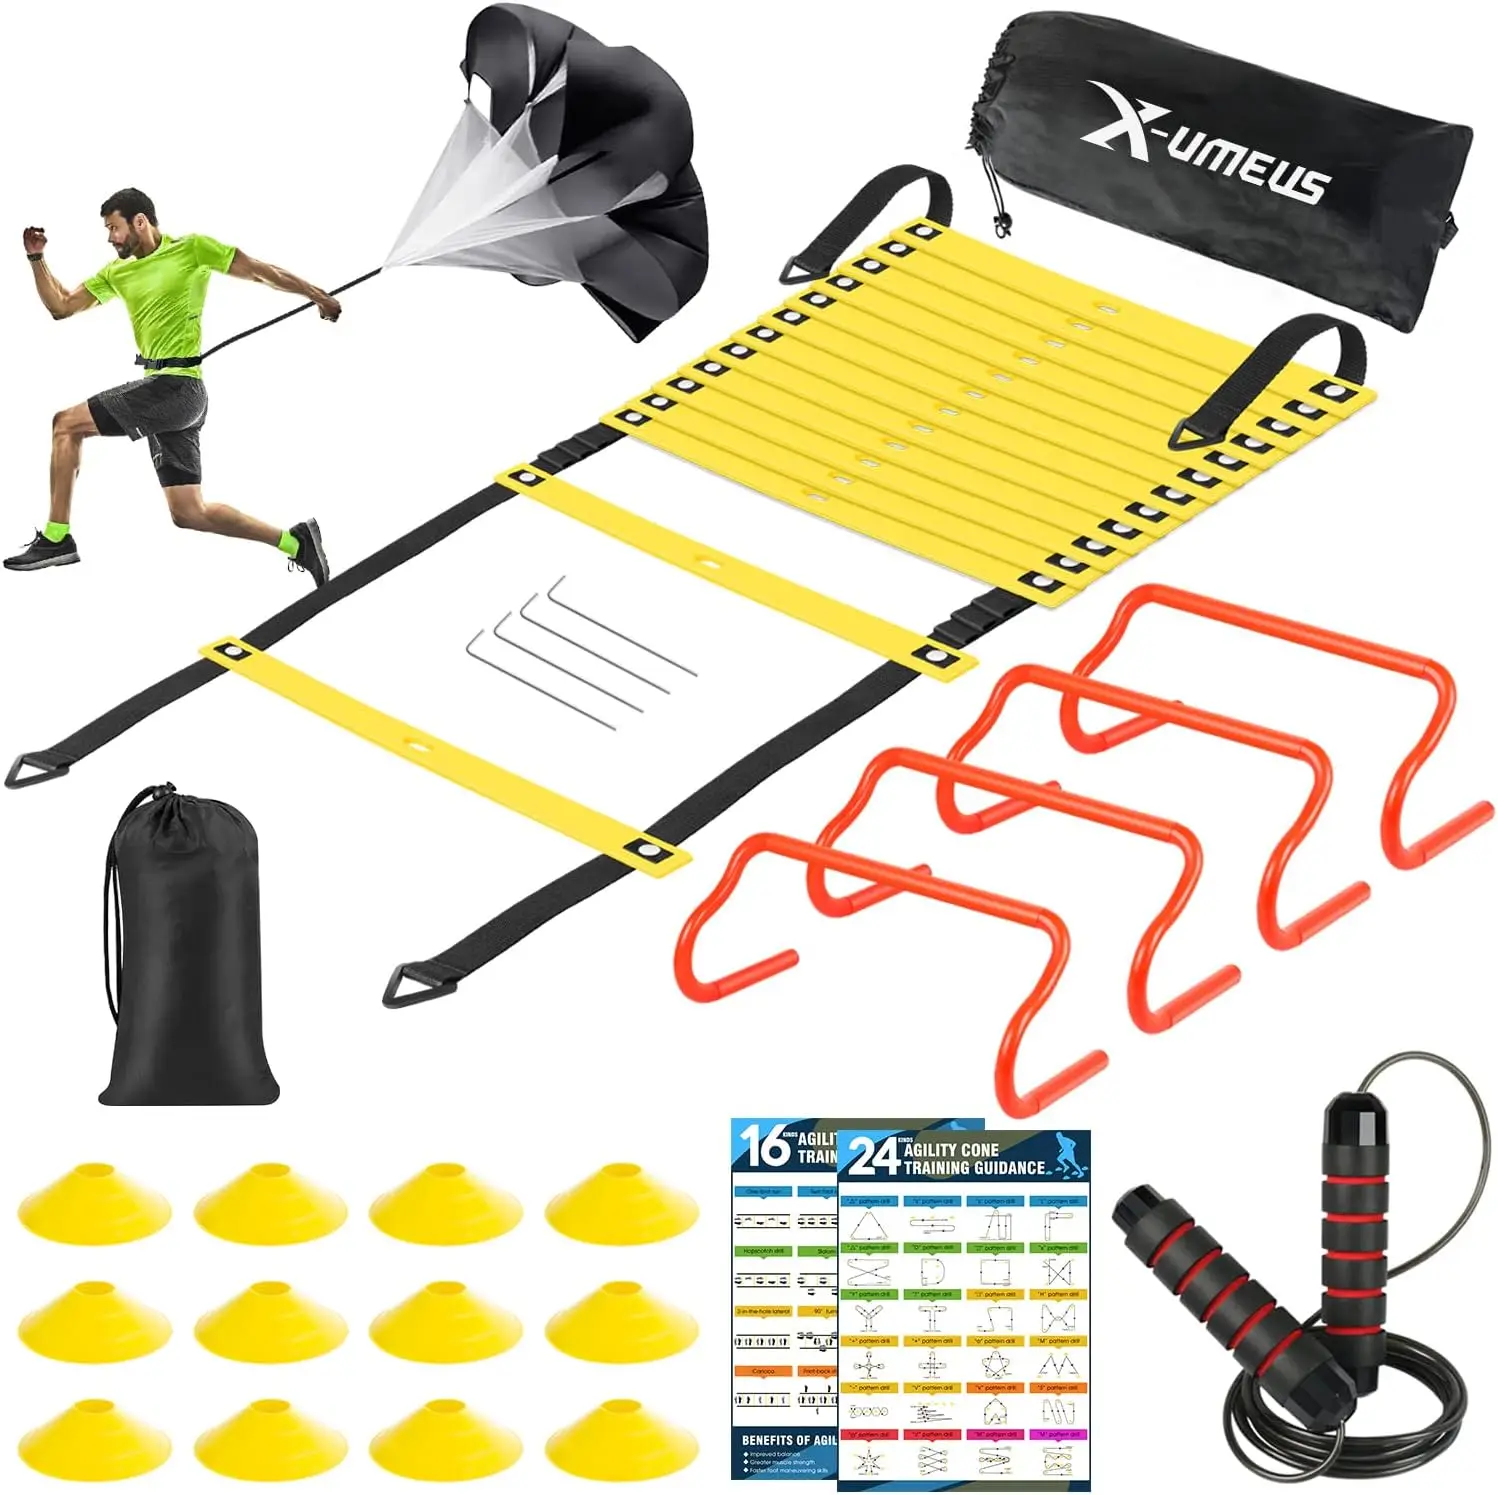 

Teenage/children training equipment kit, 20 foot agility ladder, 12 football cones, 4 hurdles, jump rope, running parachute